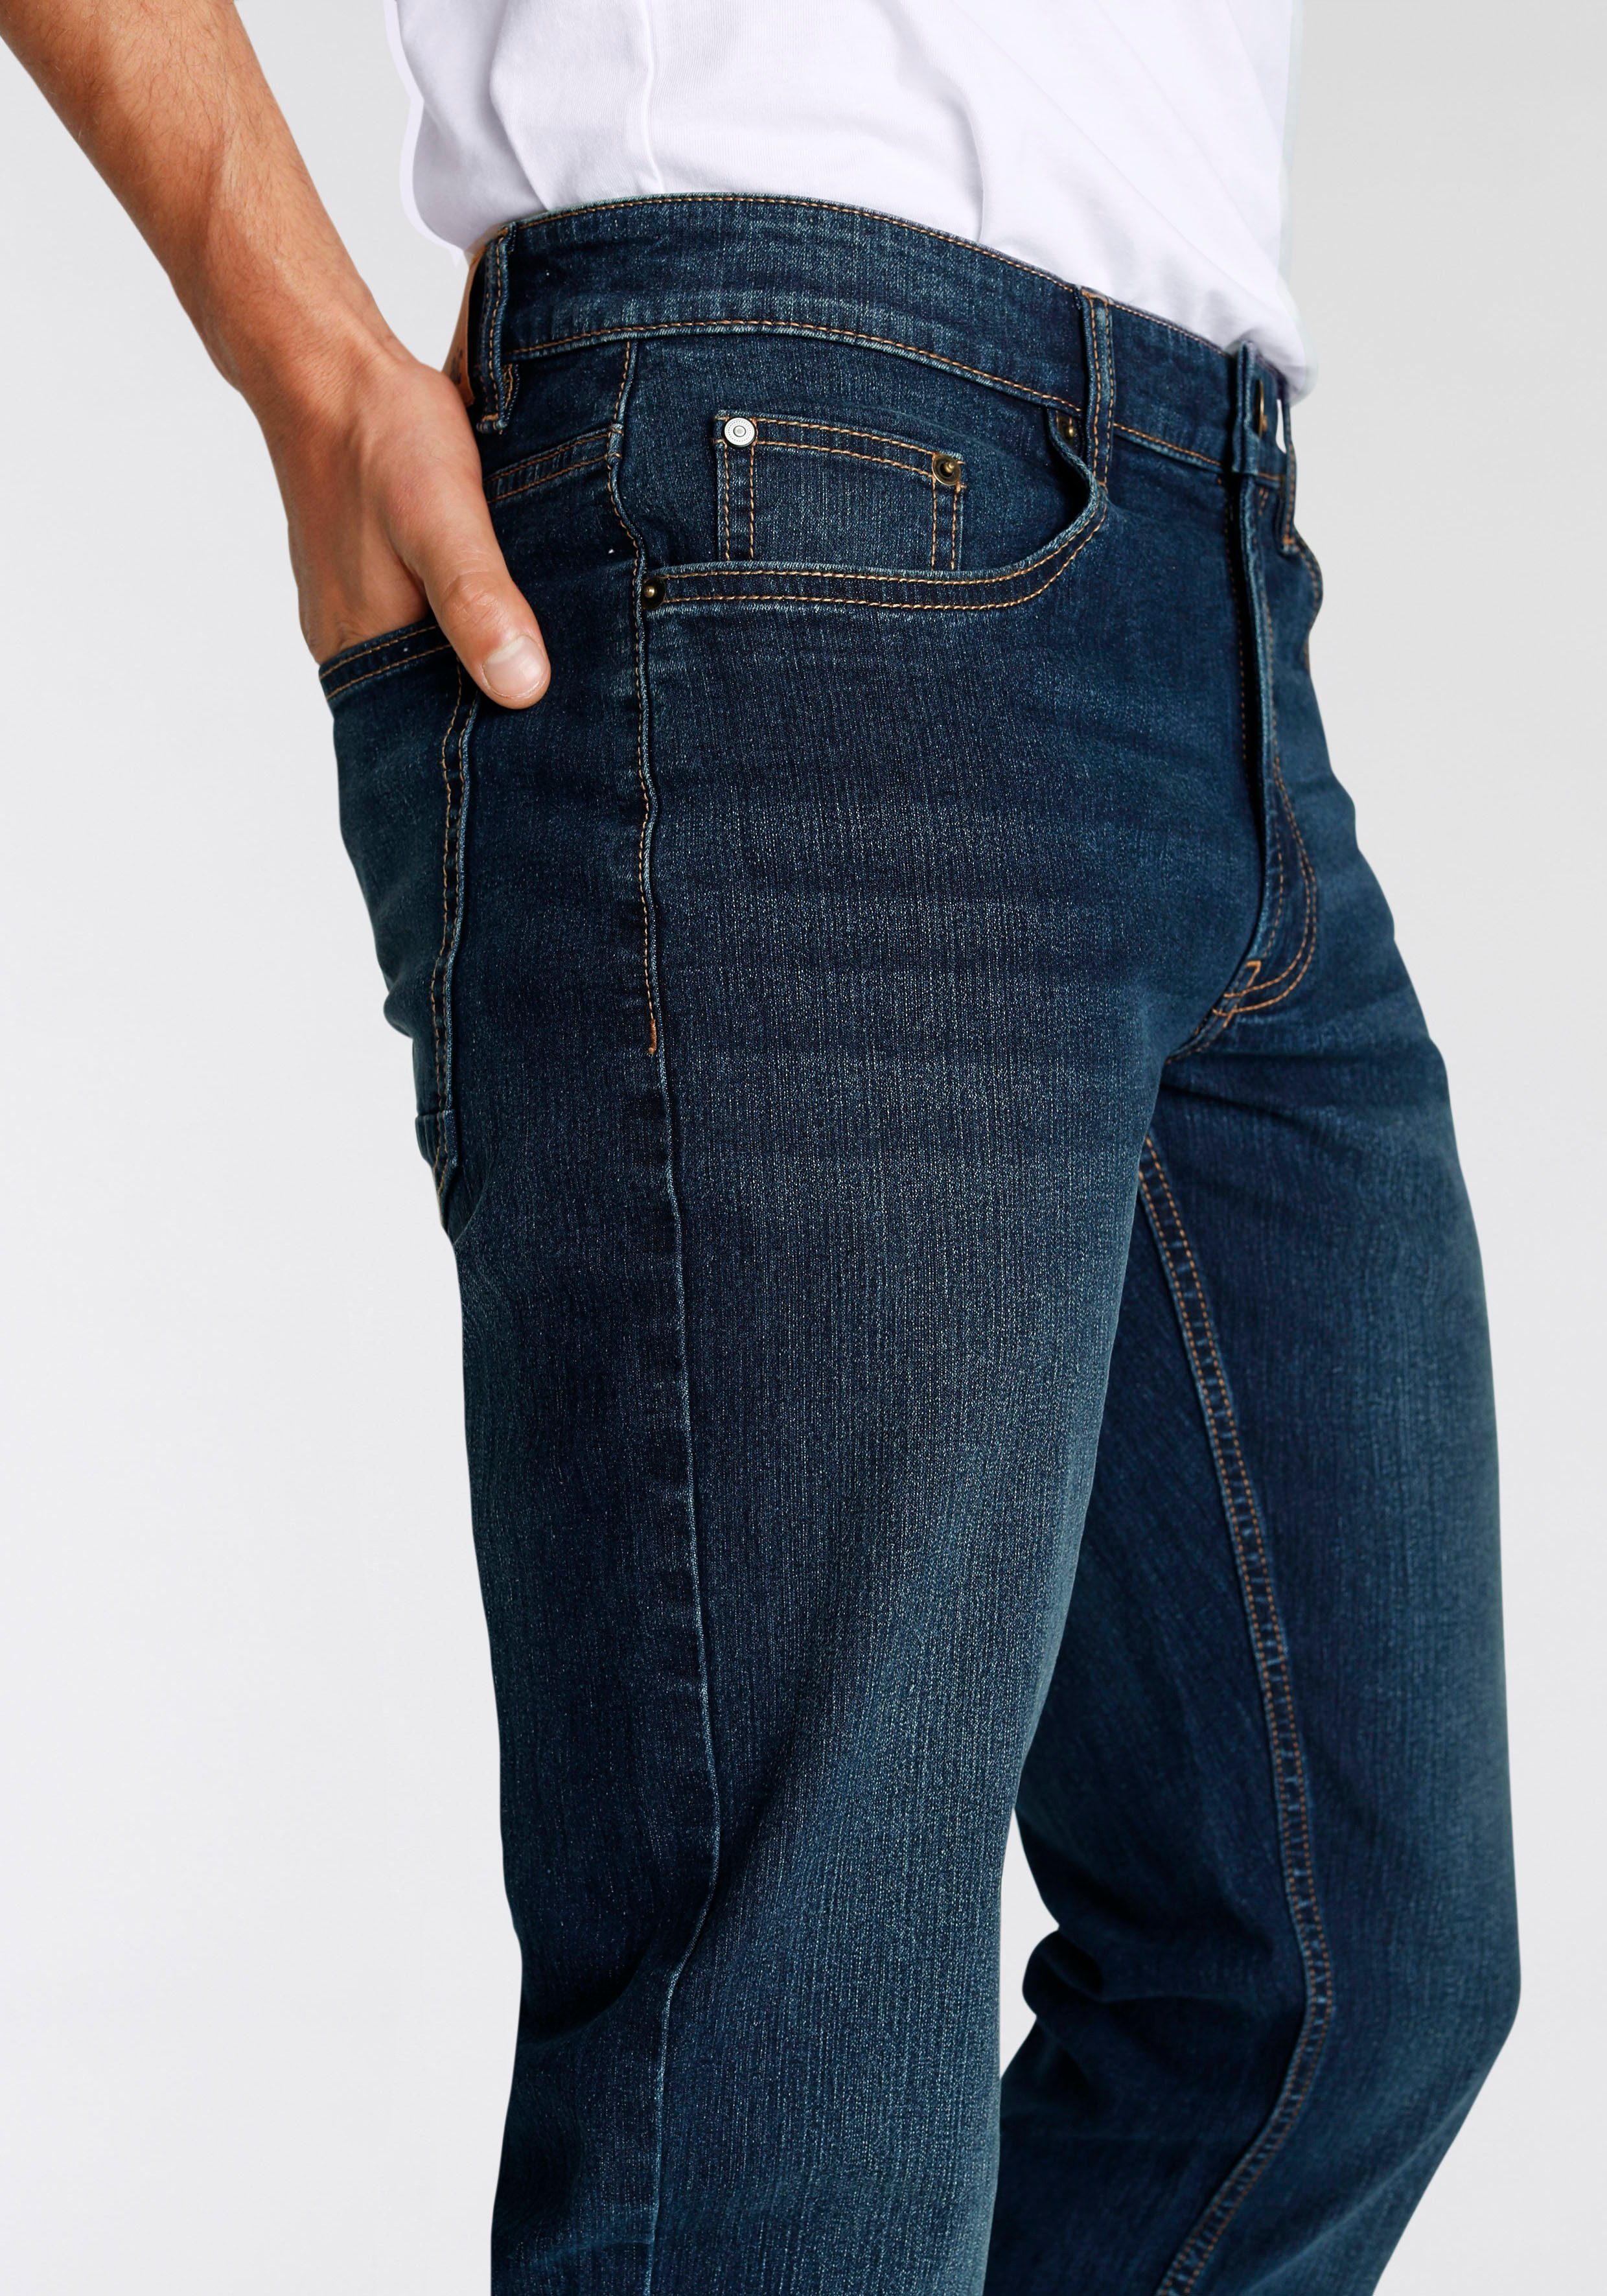 5-Pocket-Style AJC Comfort-fit-Jeans dark blue im